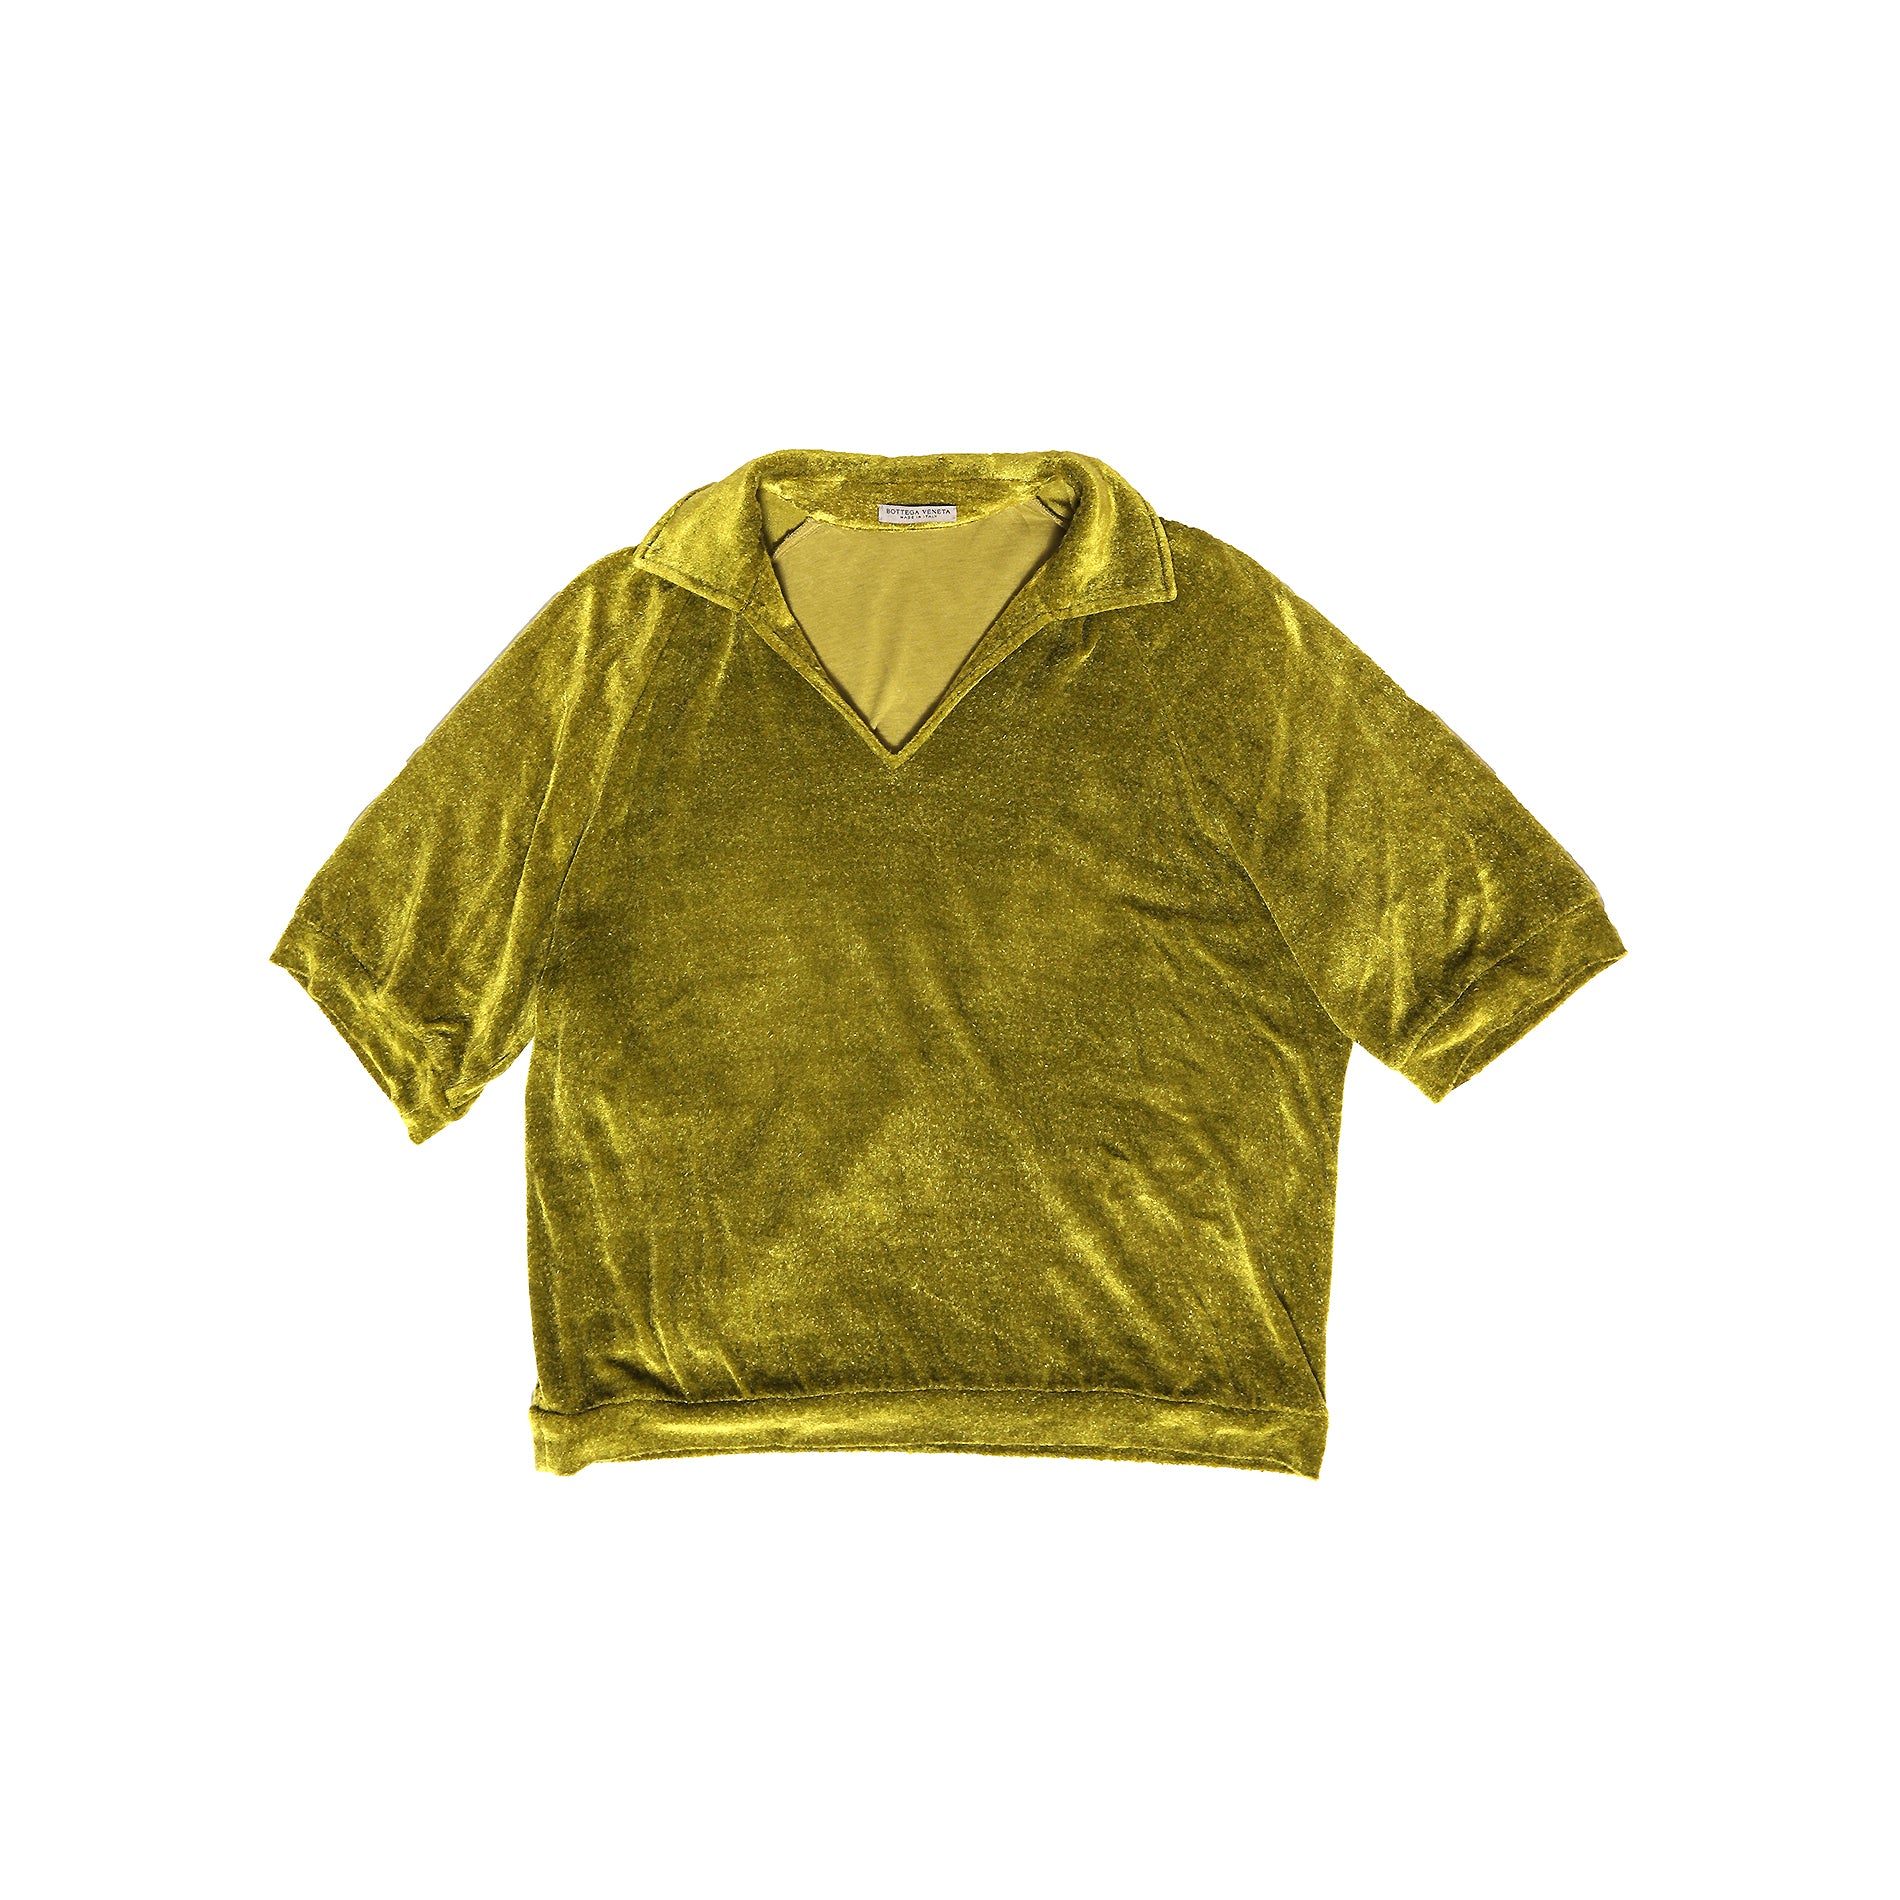 Bottega Veneta Velvet Intrecciato Collared Shirt